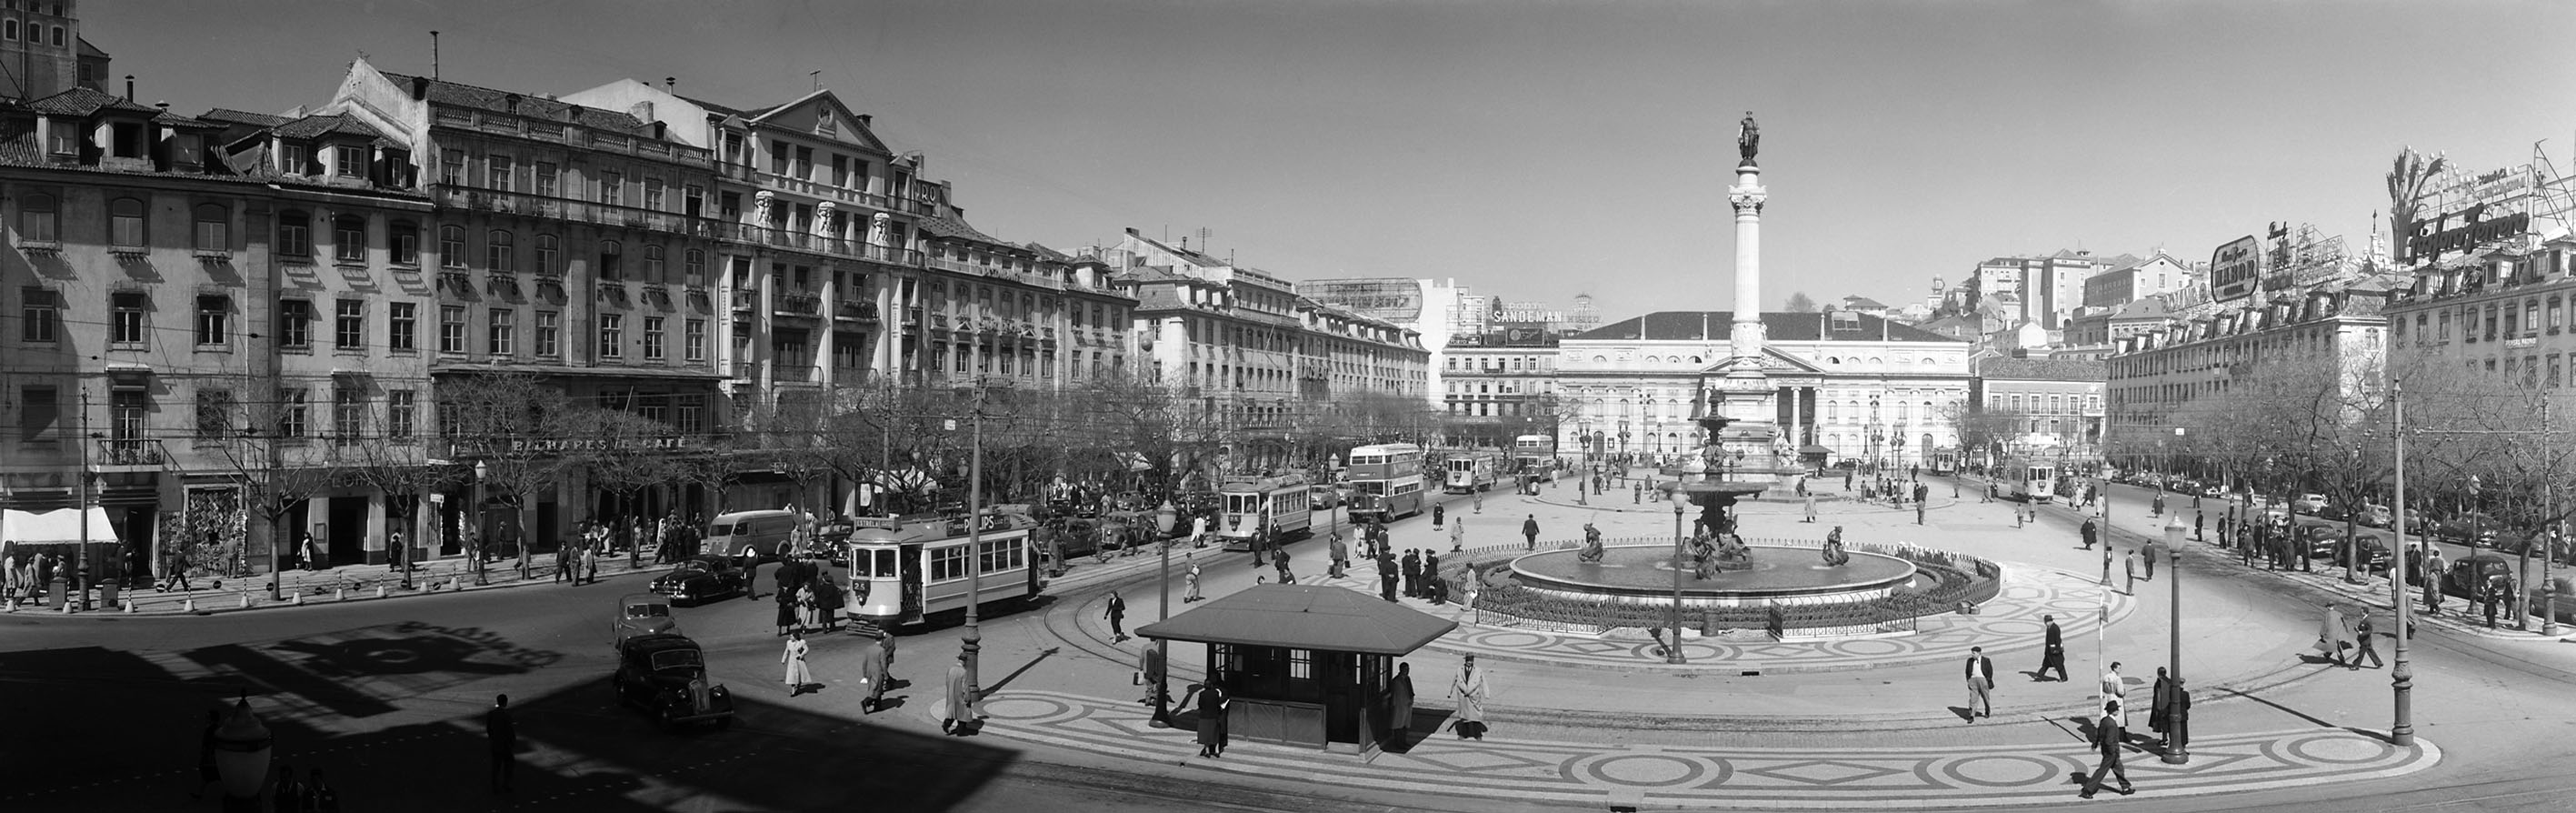 Rossio (Praça Dom Pedro IV), Lisboa, Portugal